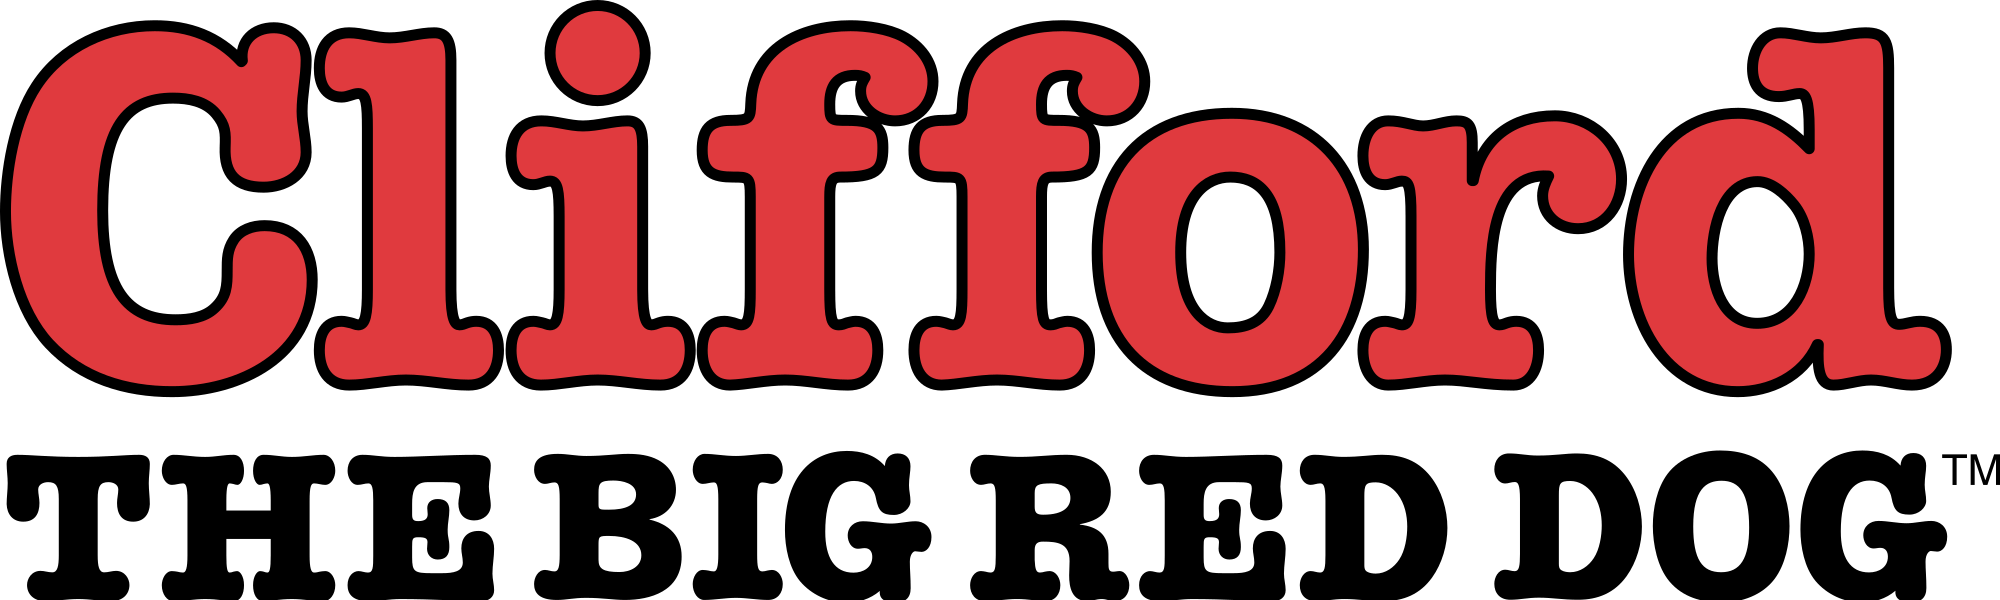 Clifford Logo - Clifford the Big Red Dog logo.svg